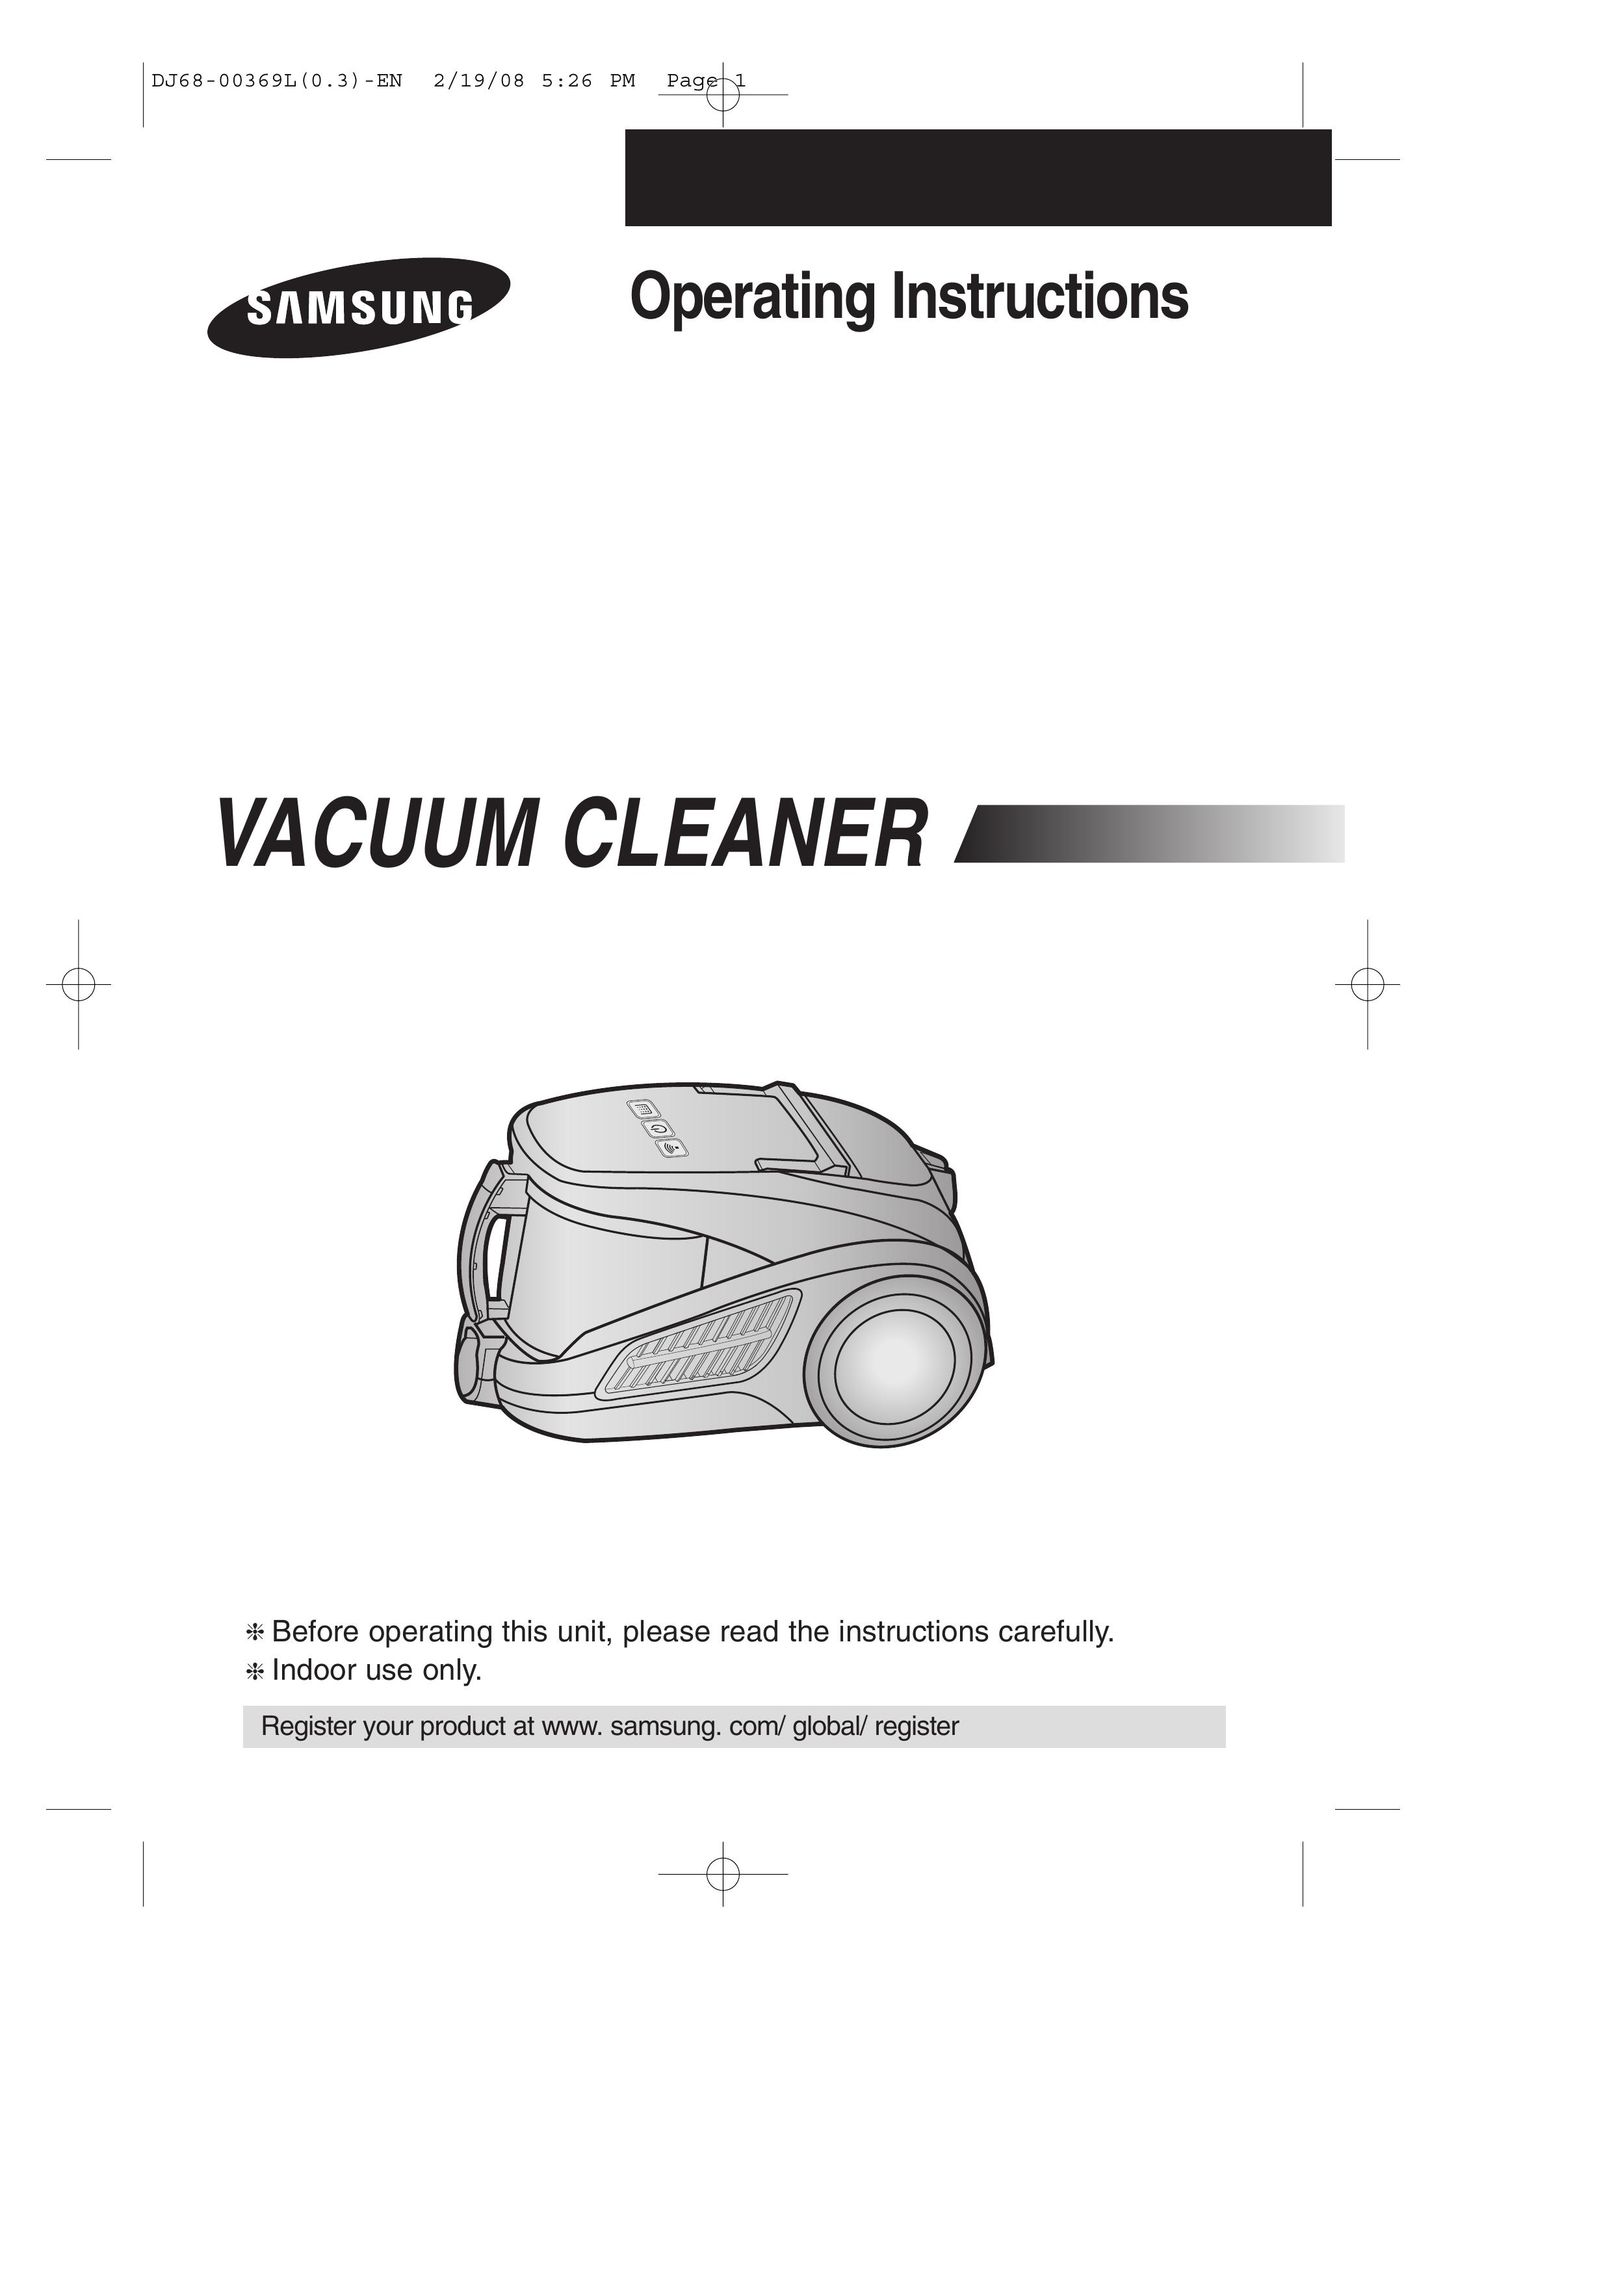 Samsung SC9190 Vacuum Cleaner User Manual